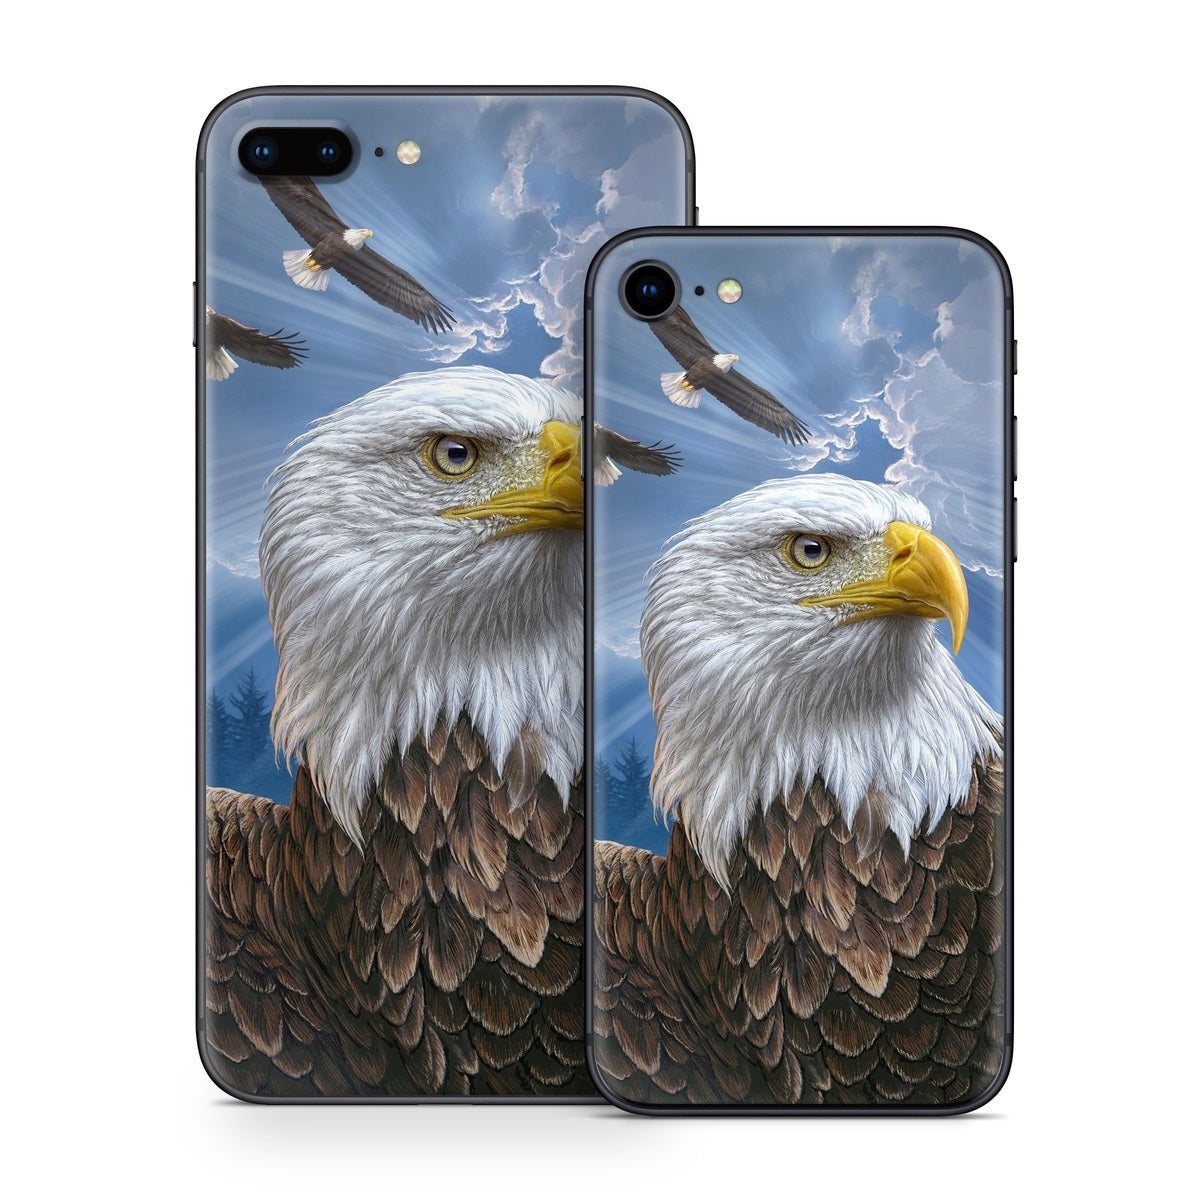 Guardian Eagle - Apple iPhone 8 Skin